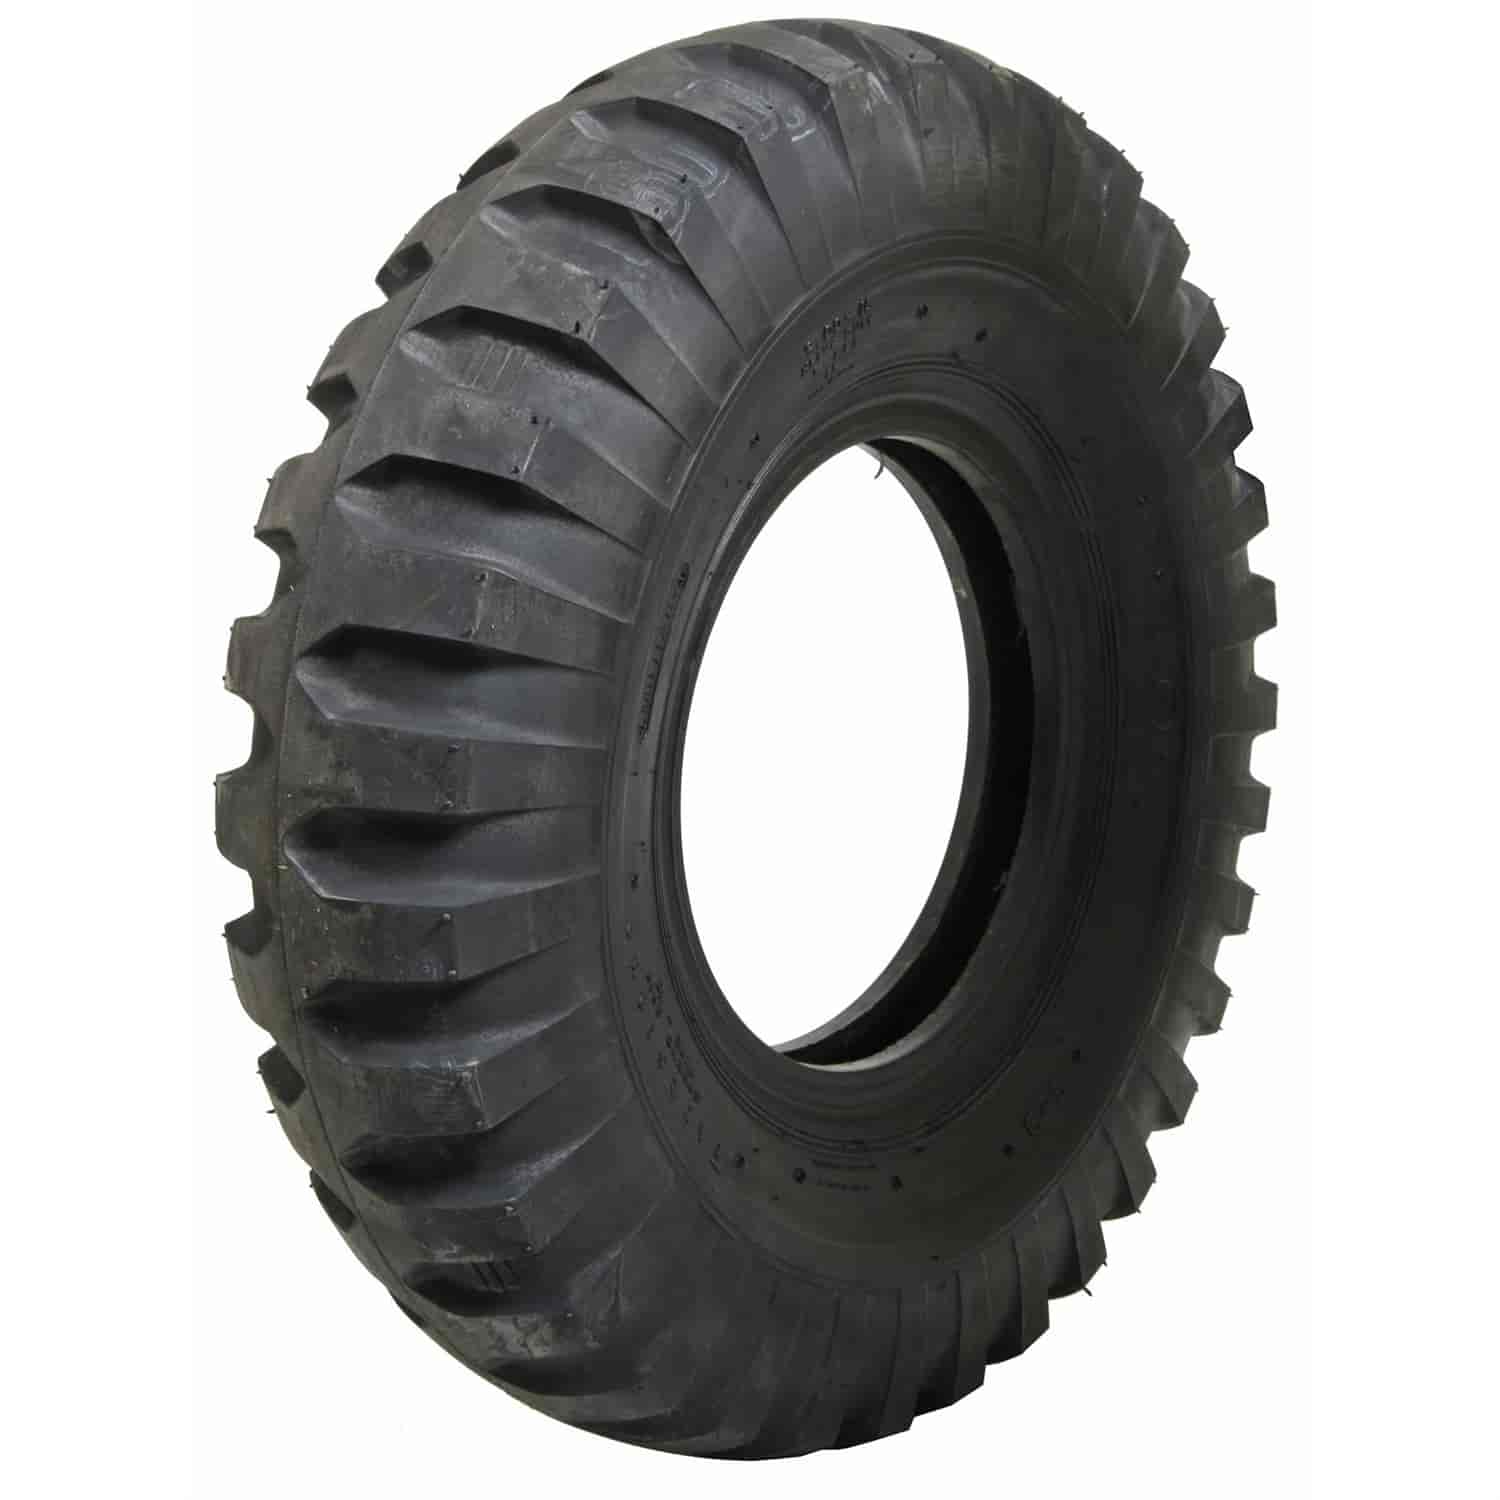 71025 900-16 Firestone NDT Military Bias Ply Tire